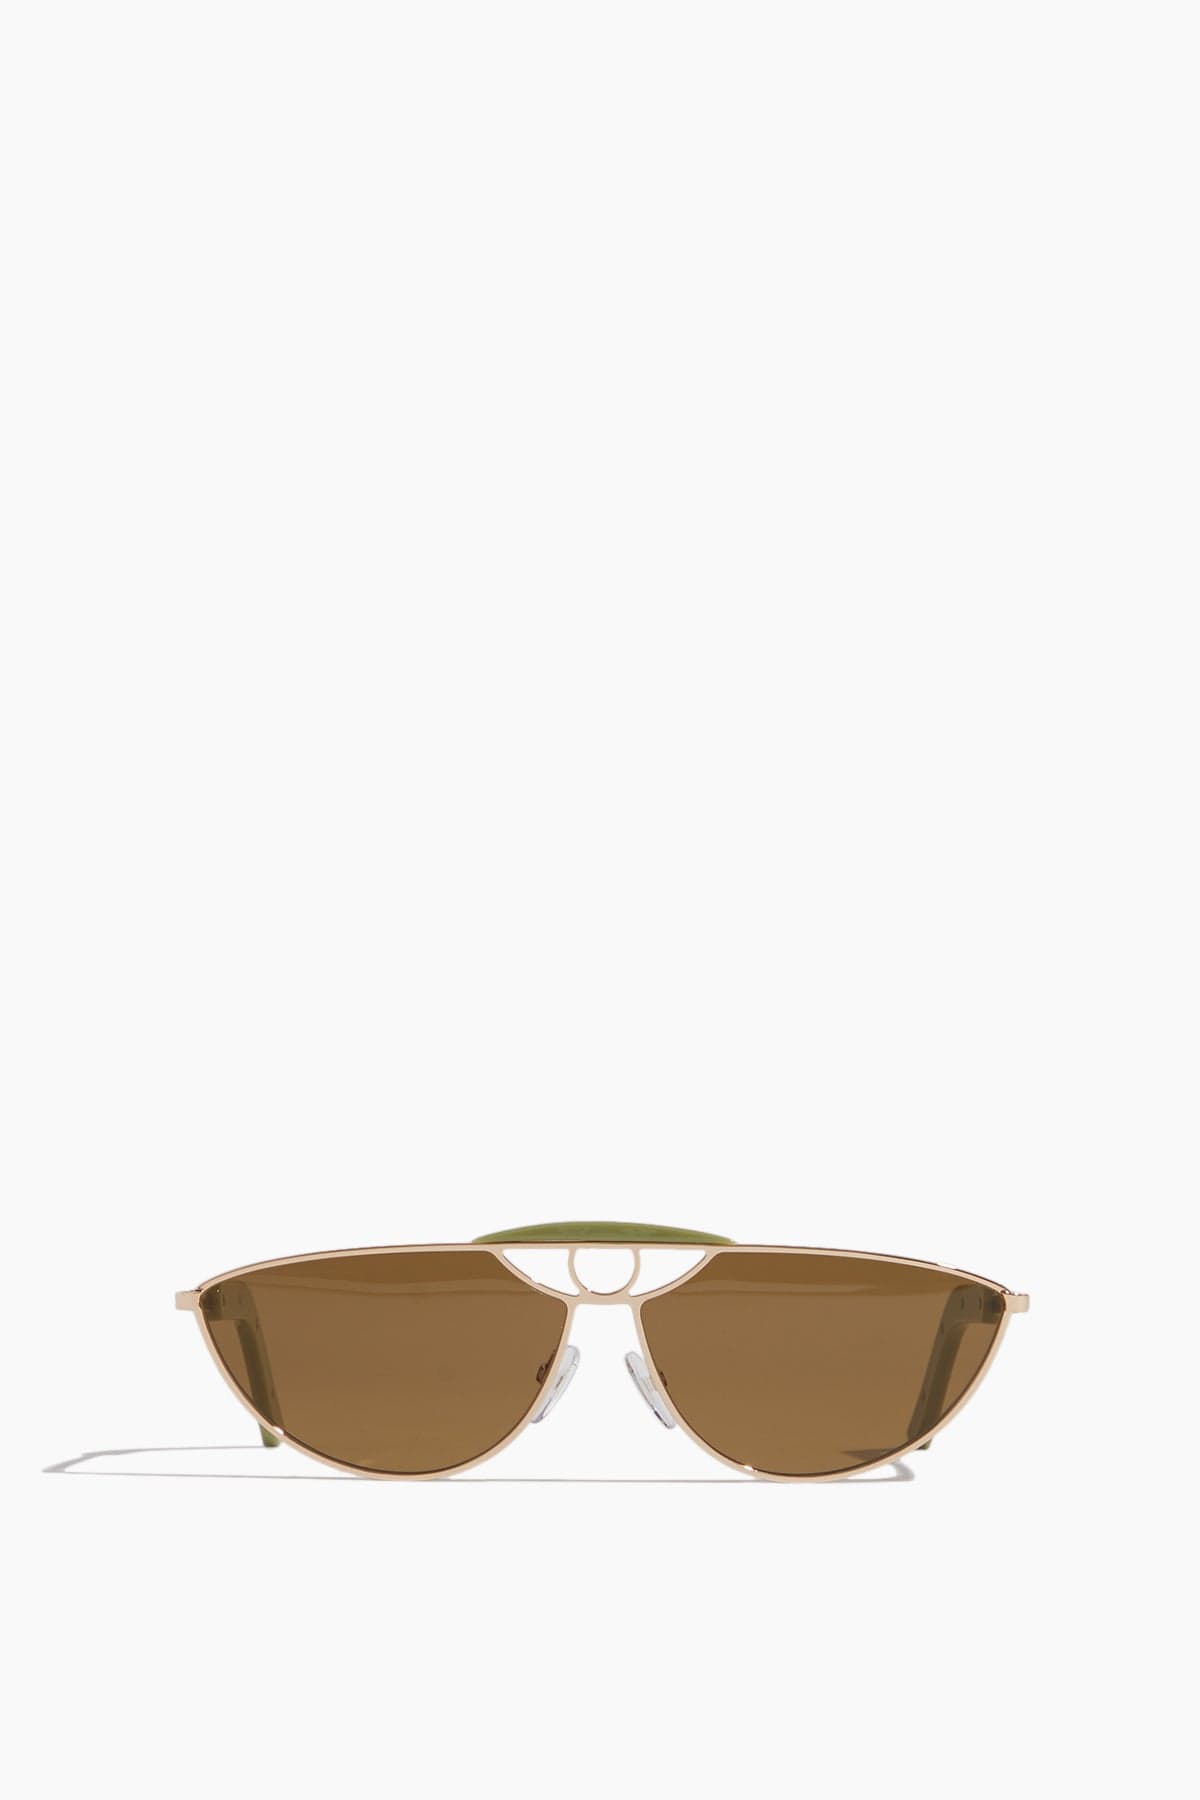 Clean Waves Sunglasses Inez and Vinoodh Eye Sunglasses in Green